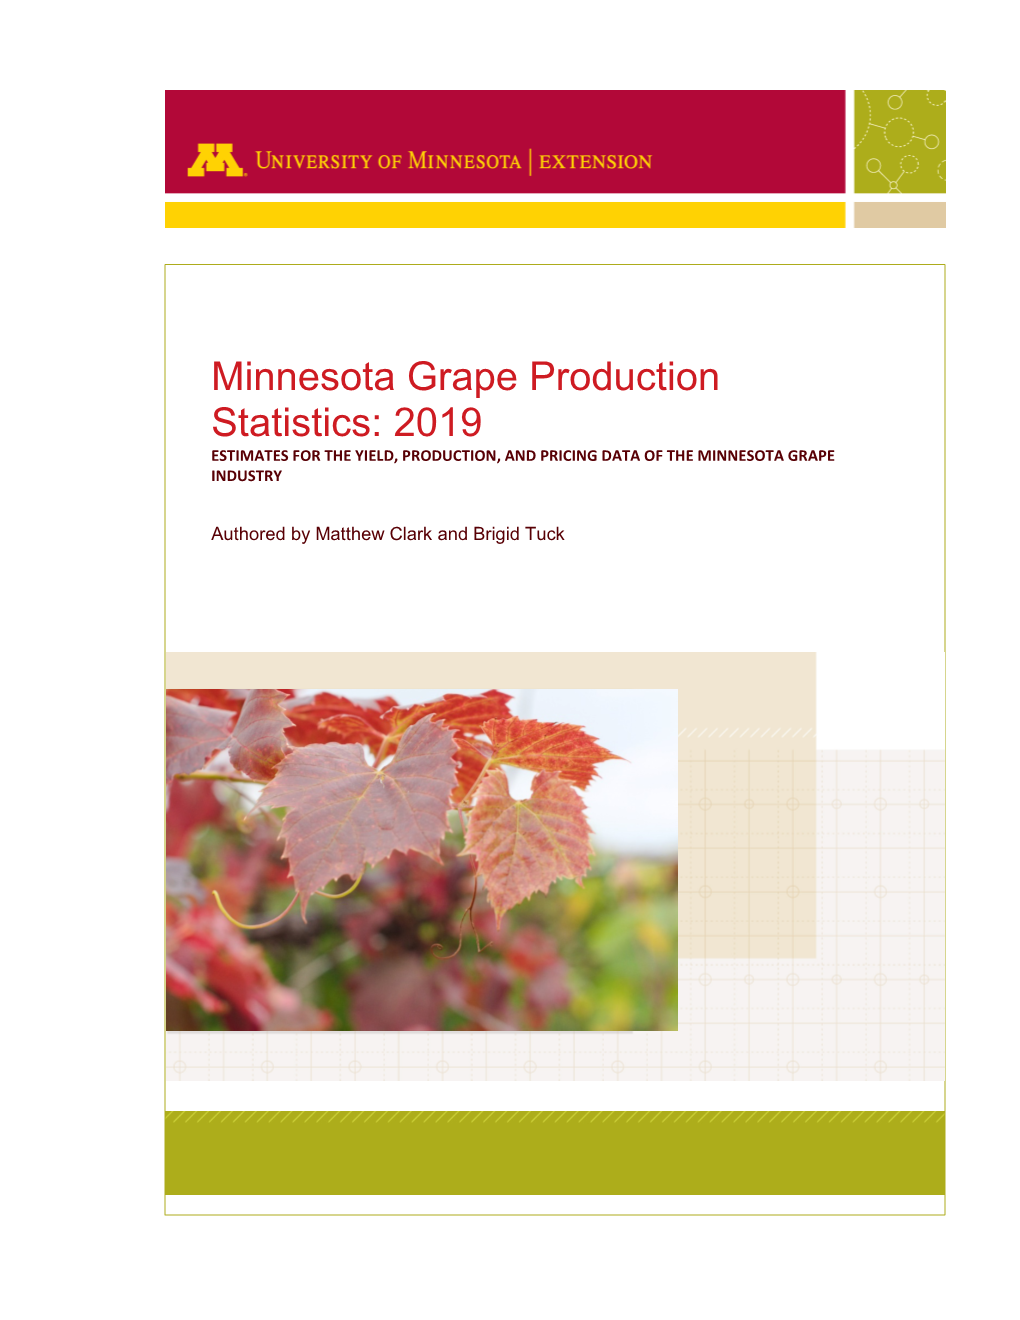 Minnesota Grape Production Statistics: 2019